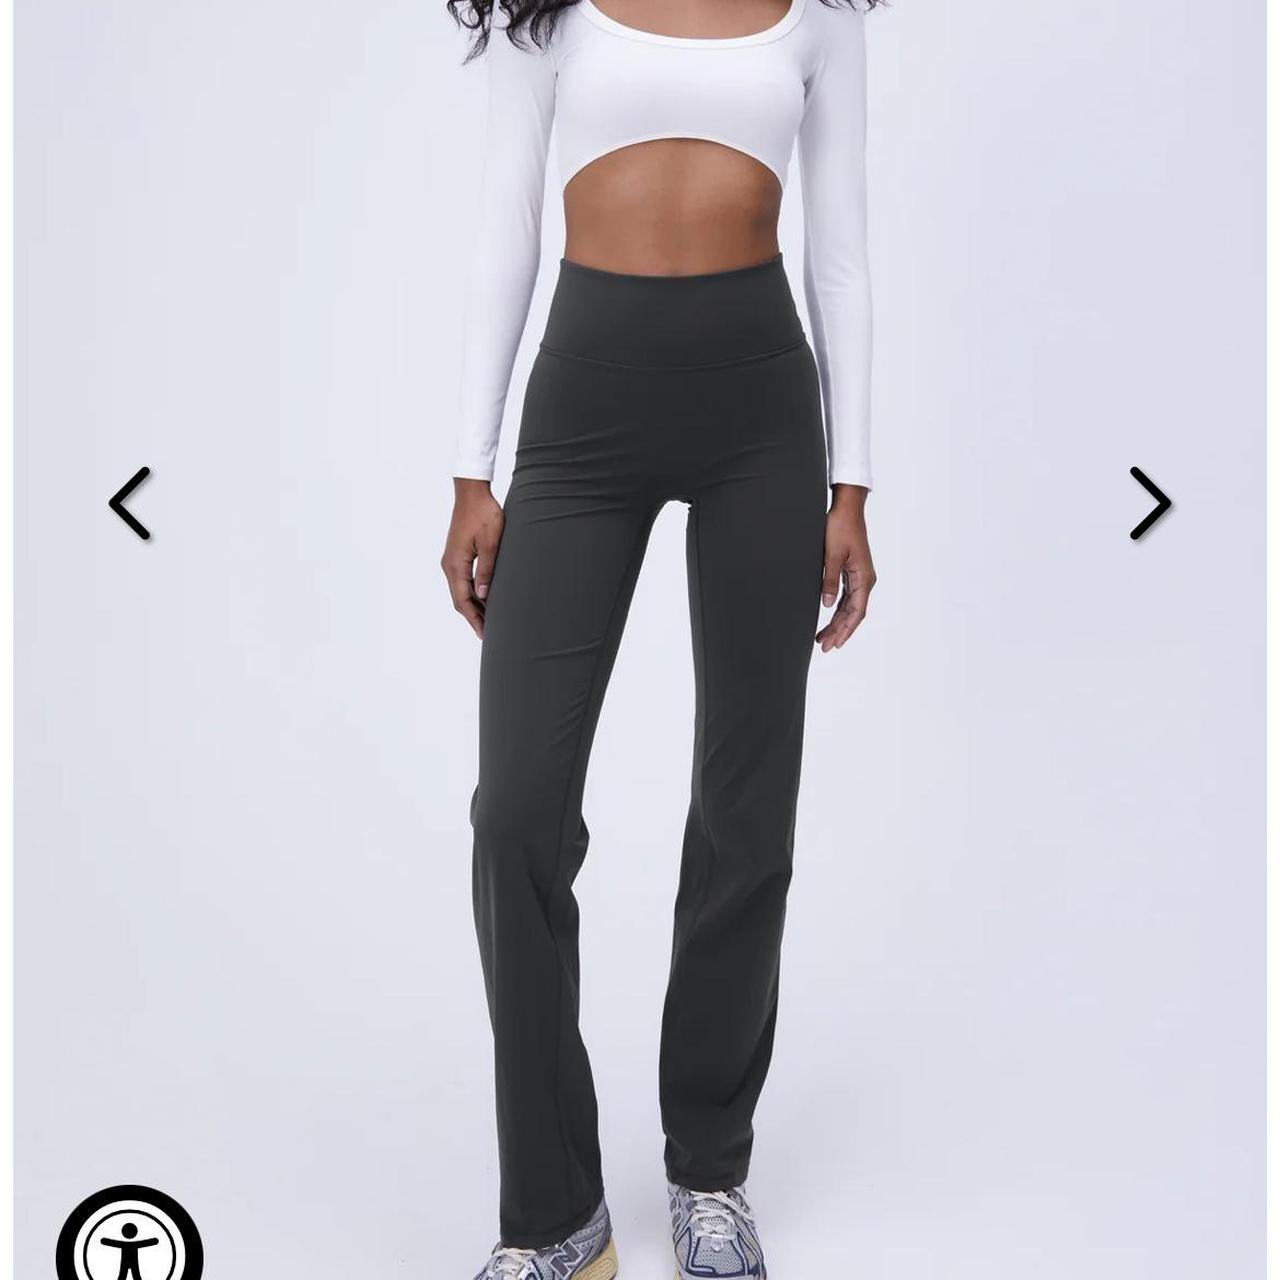 Adanola Yoga Pants, Graphite / Grey , Size XS and